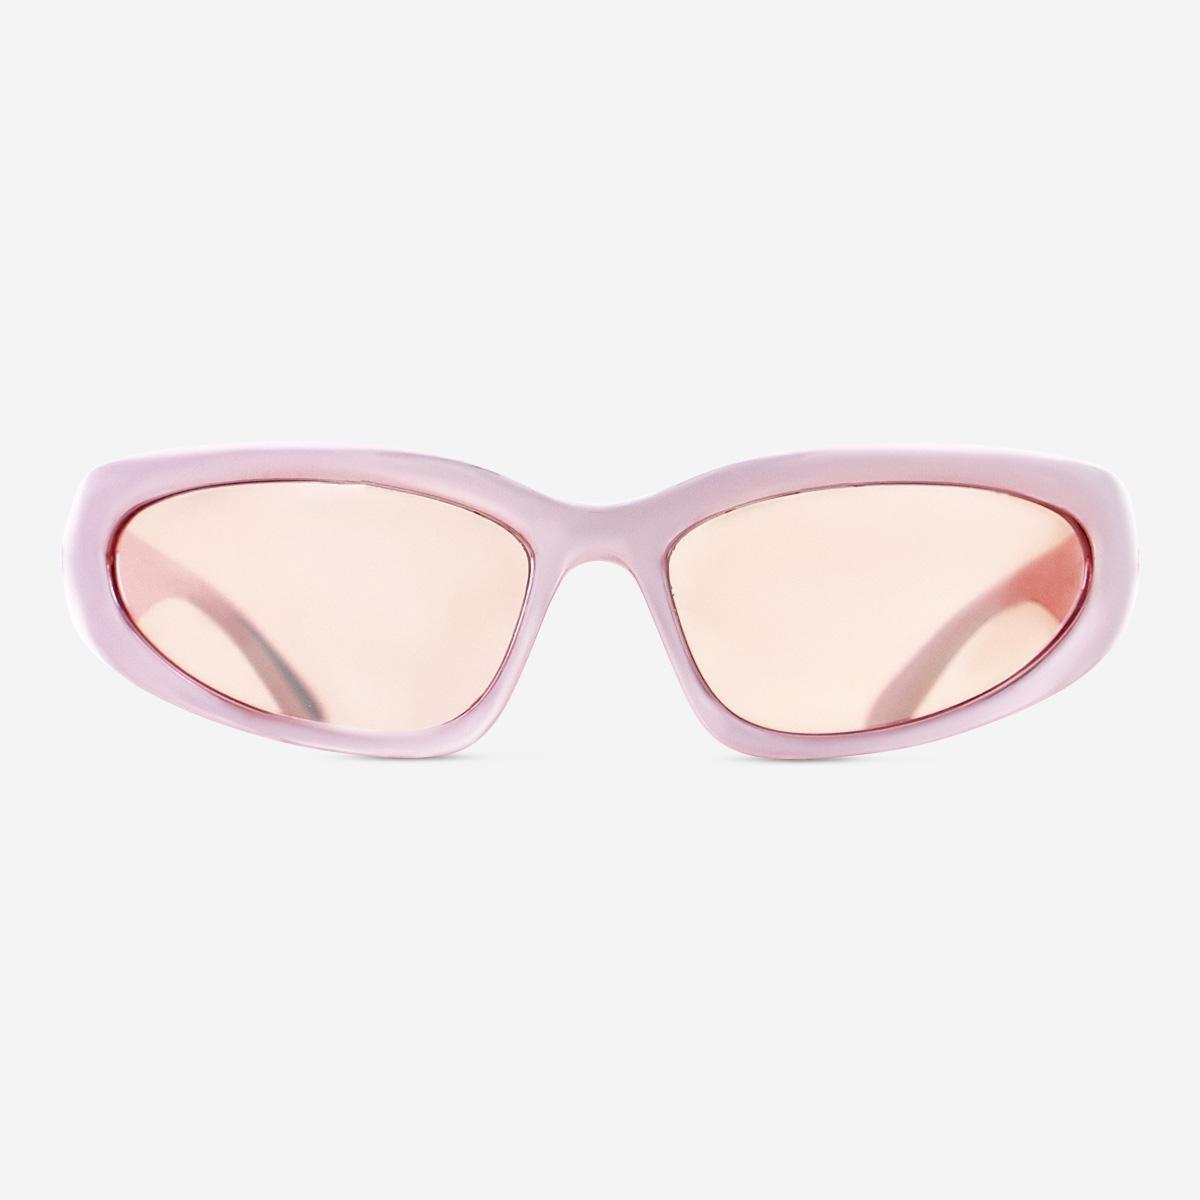 Metallic pink sunglasses